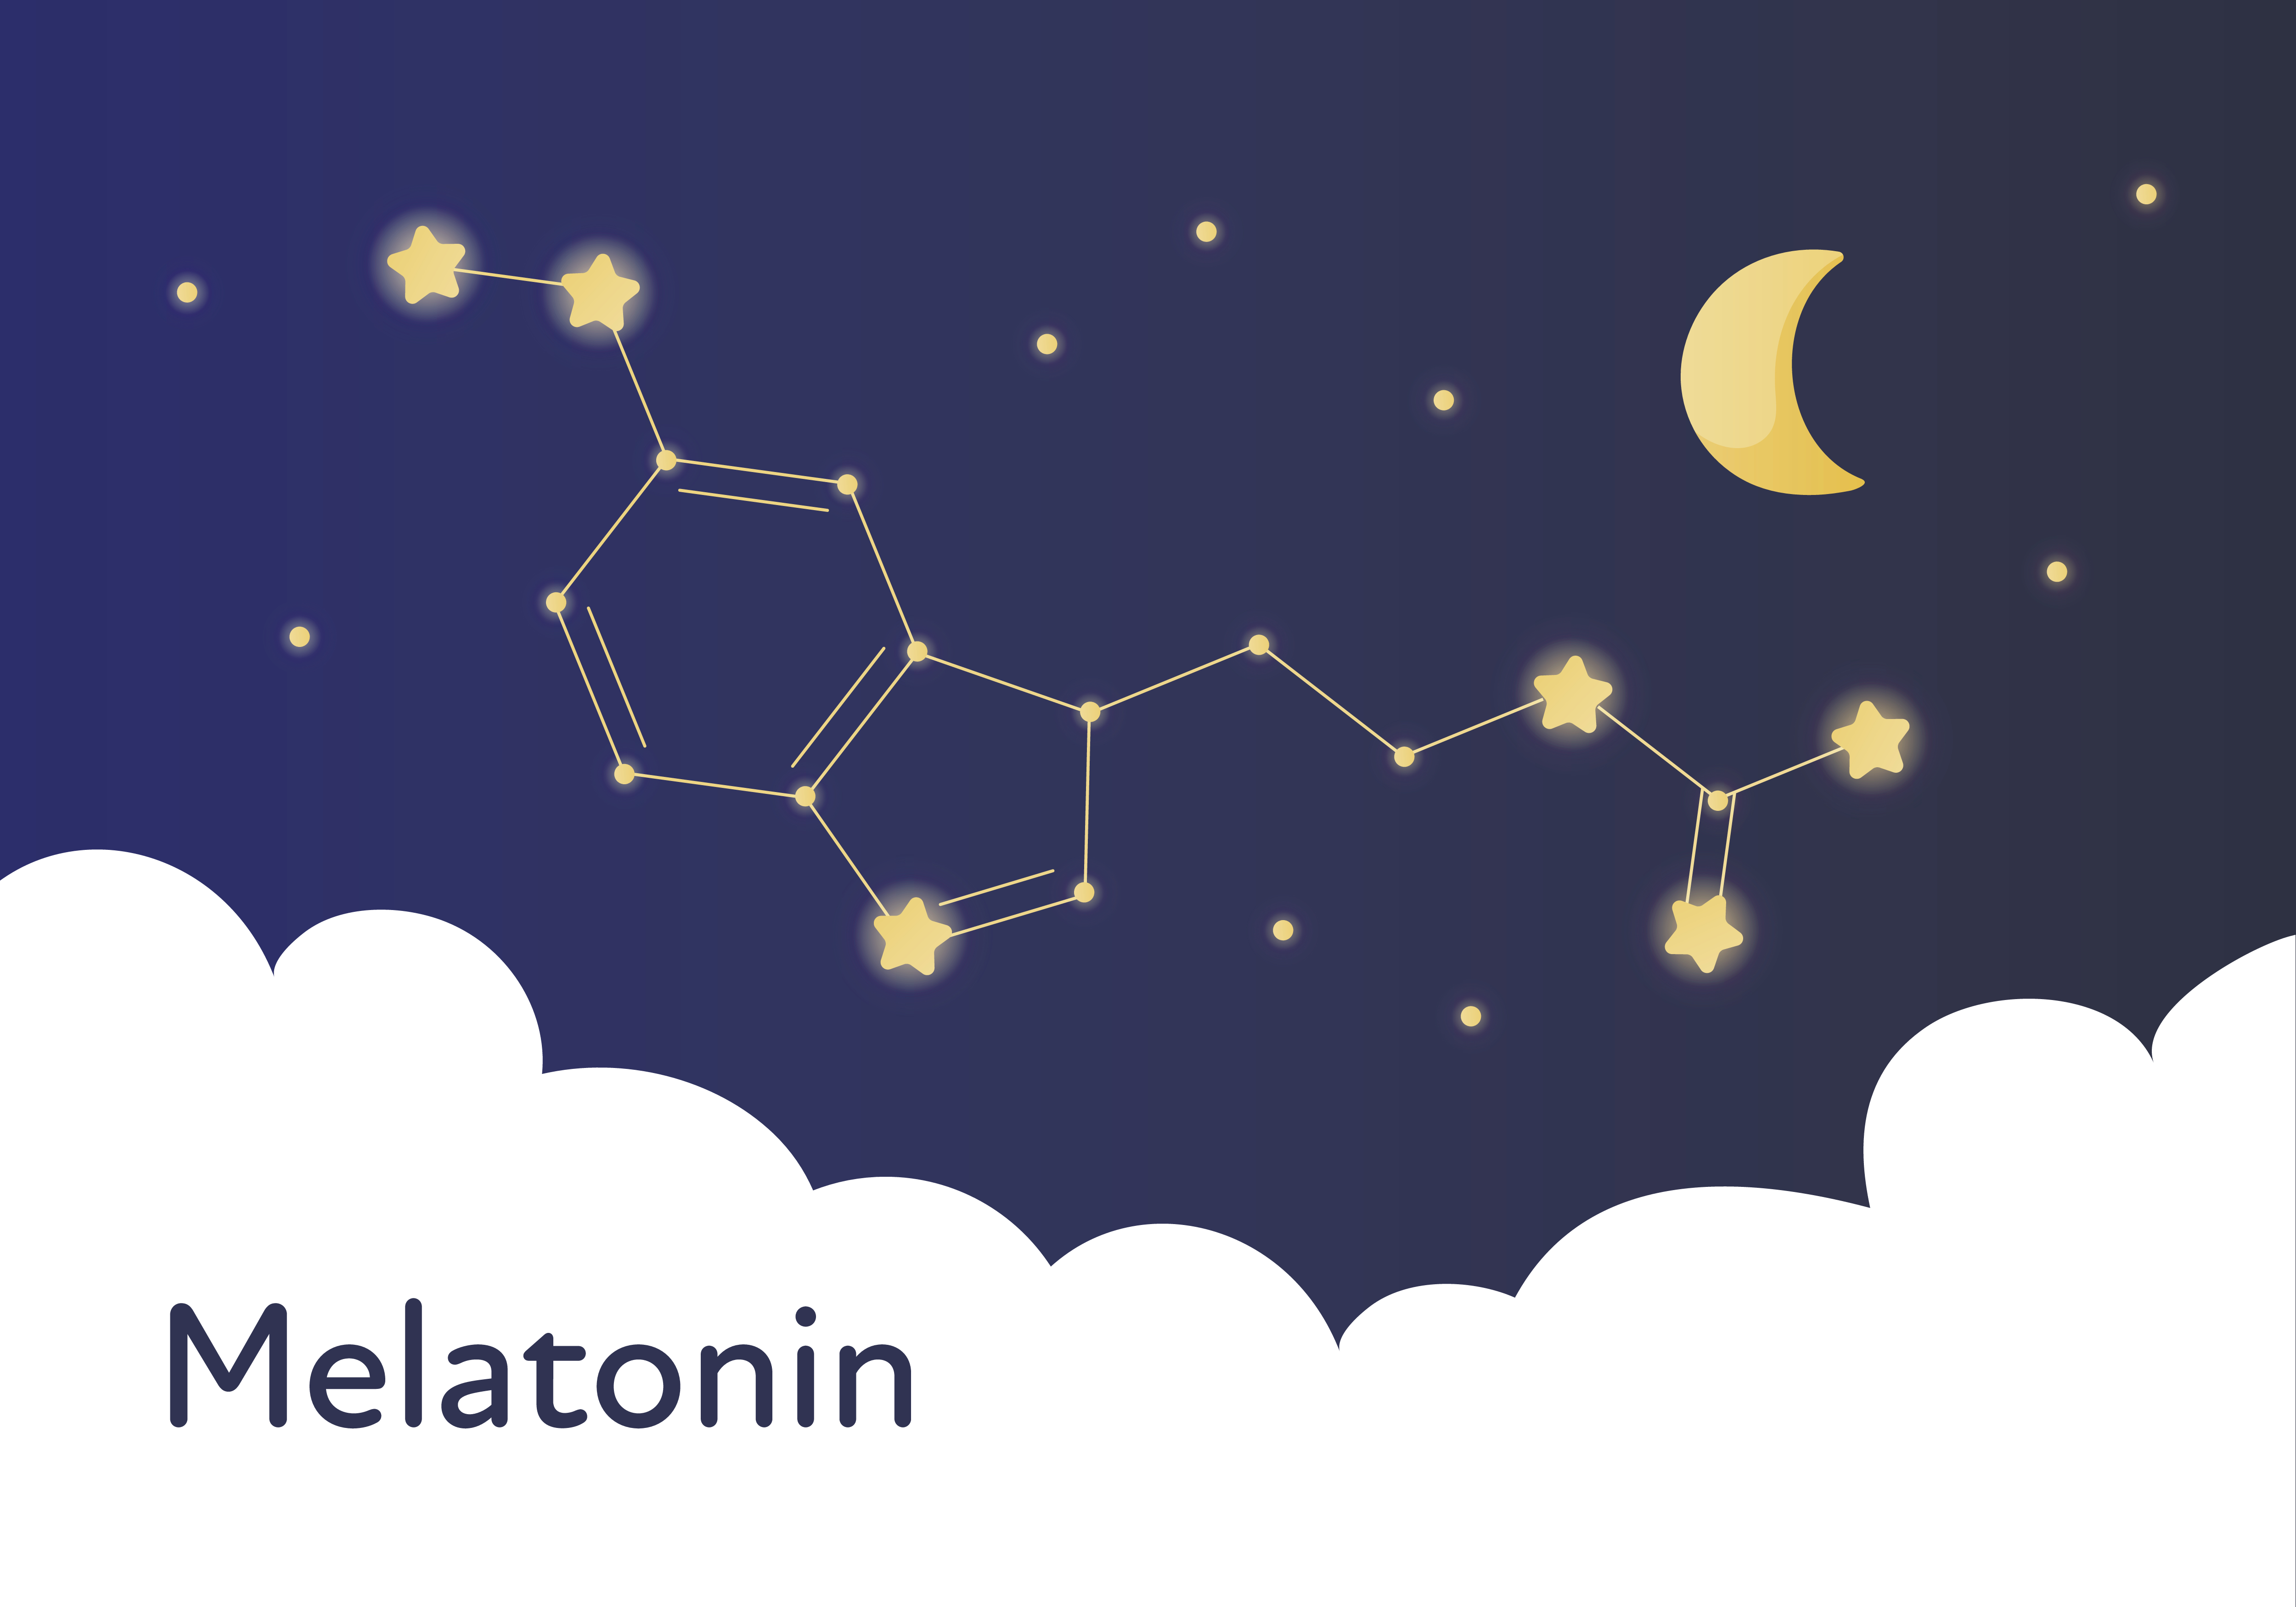 melatonin health benefits